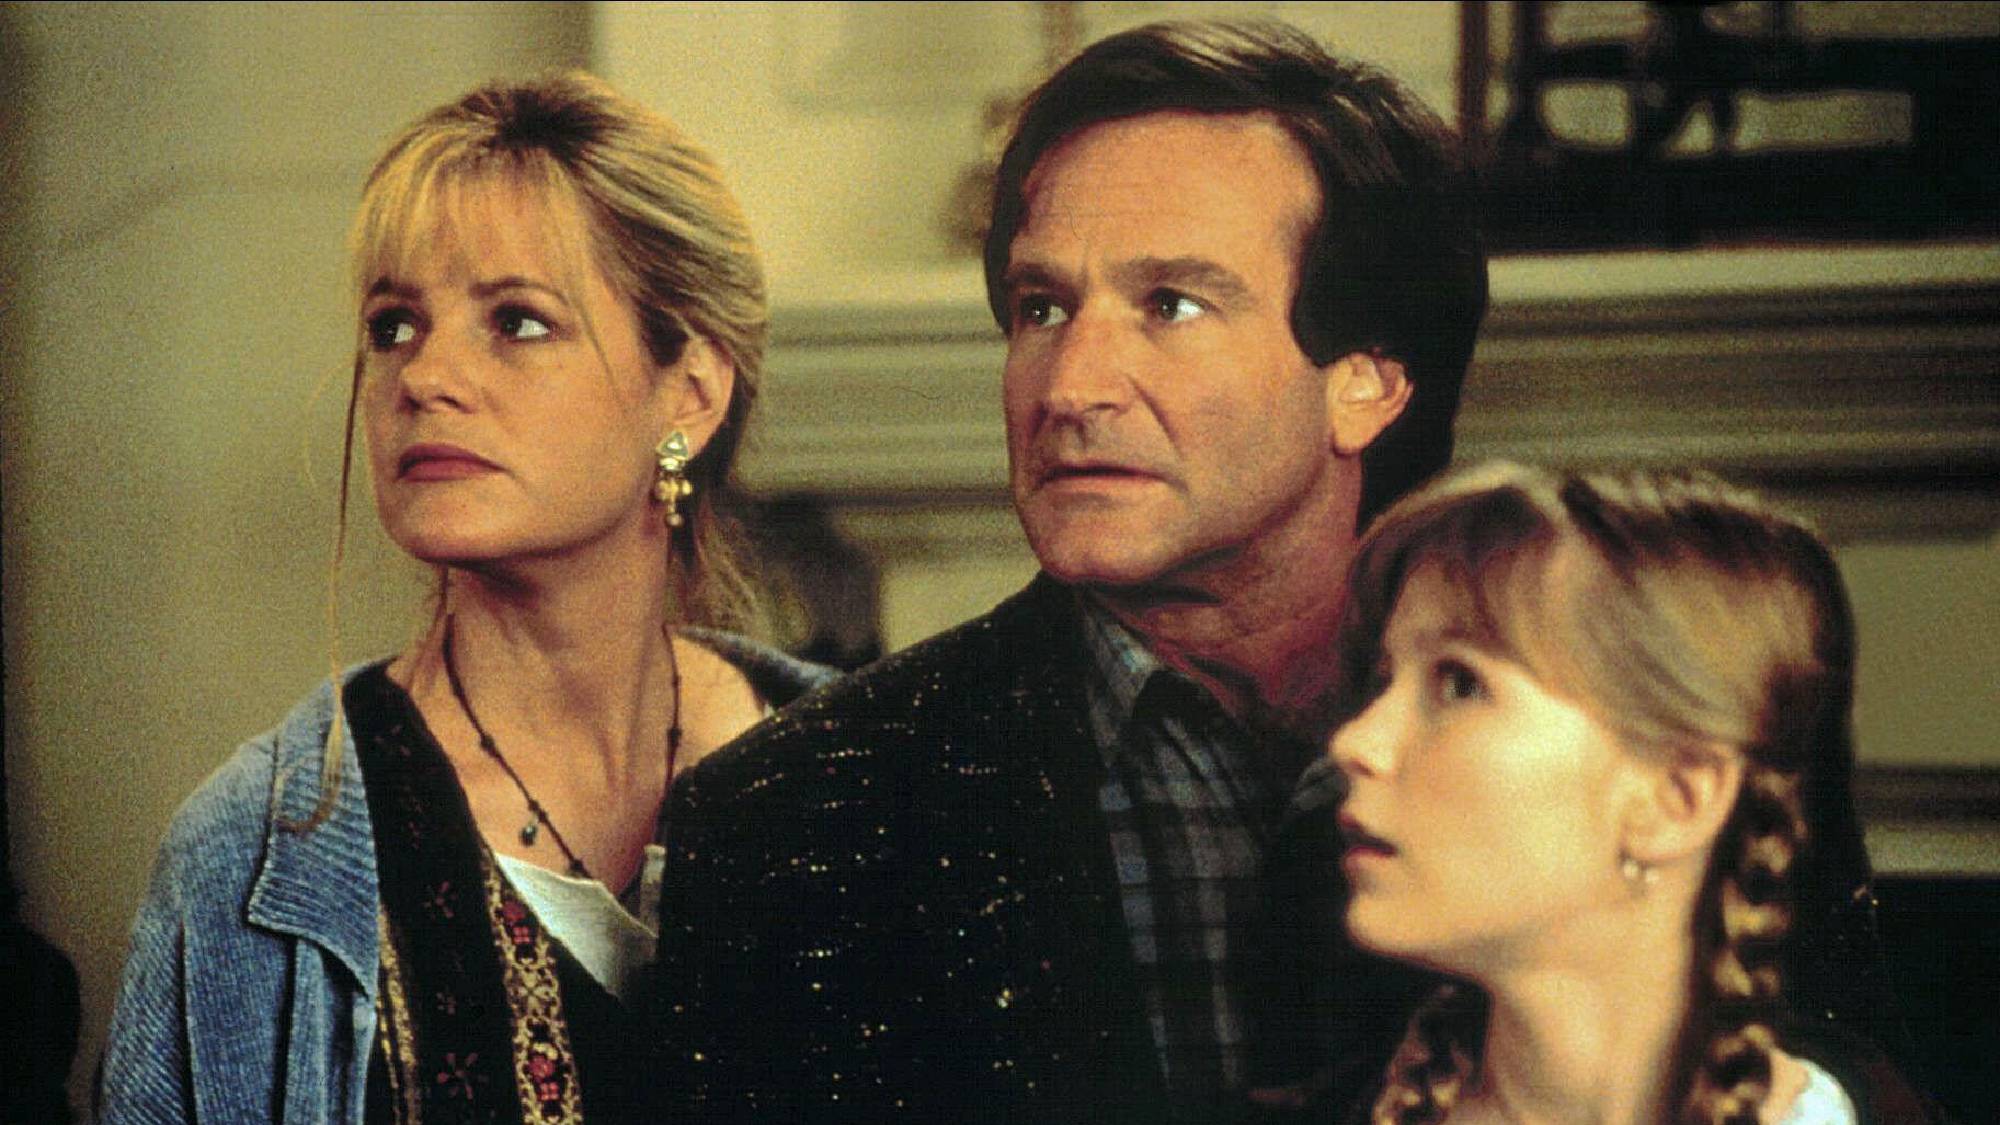 Bonnie Hunt as Sarah Whittle, Robin Williams as Alan Parrish and Kirsten Dunst as Judy Shepherd in Jumanji